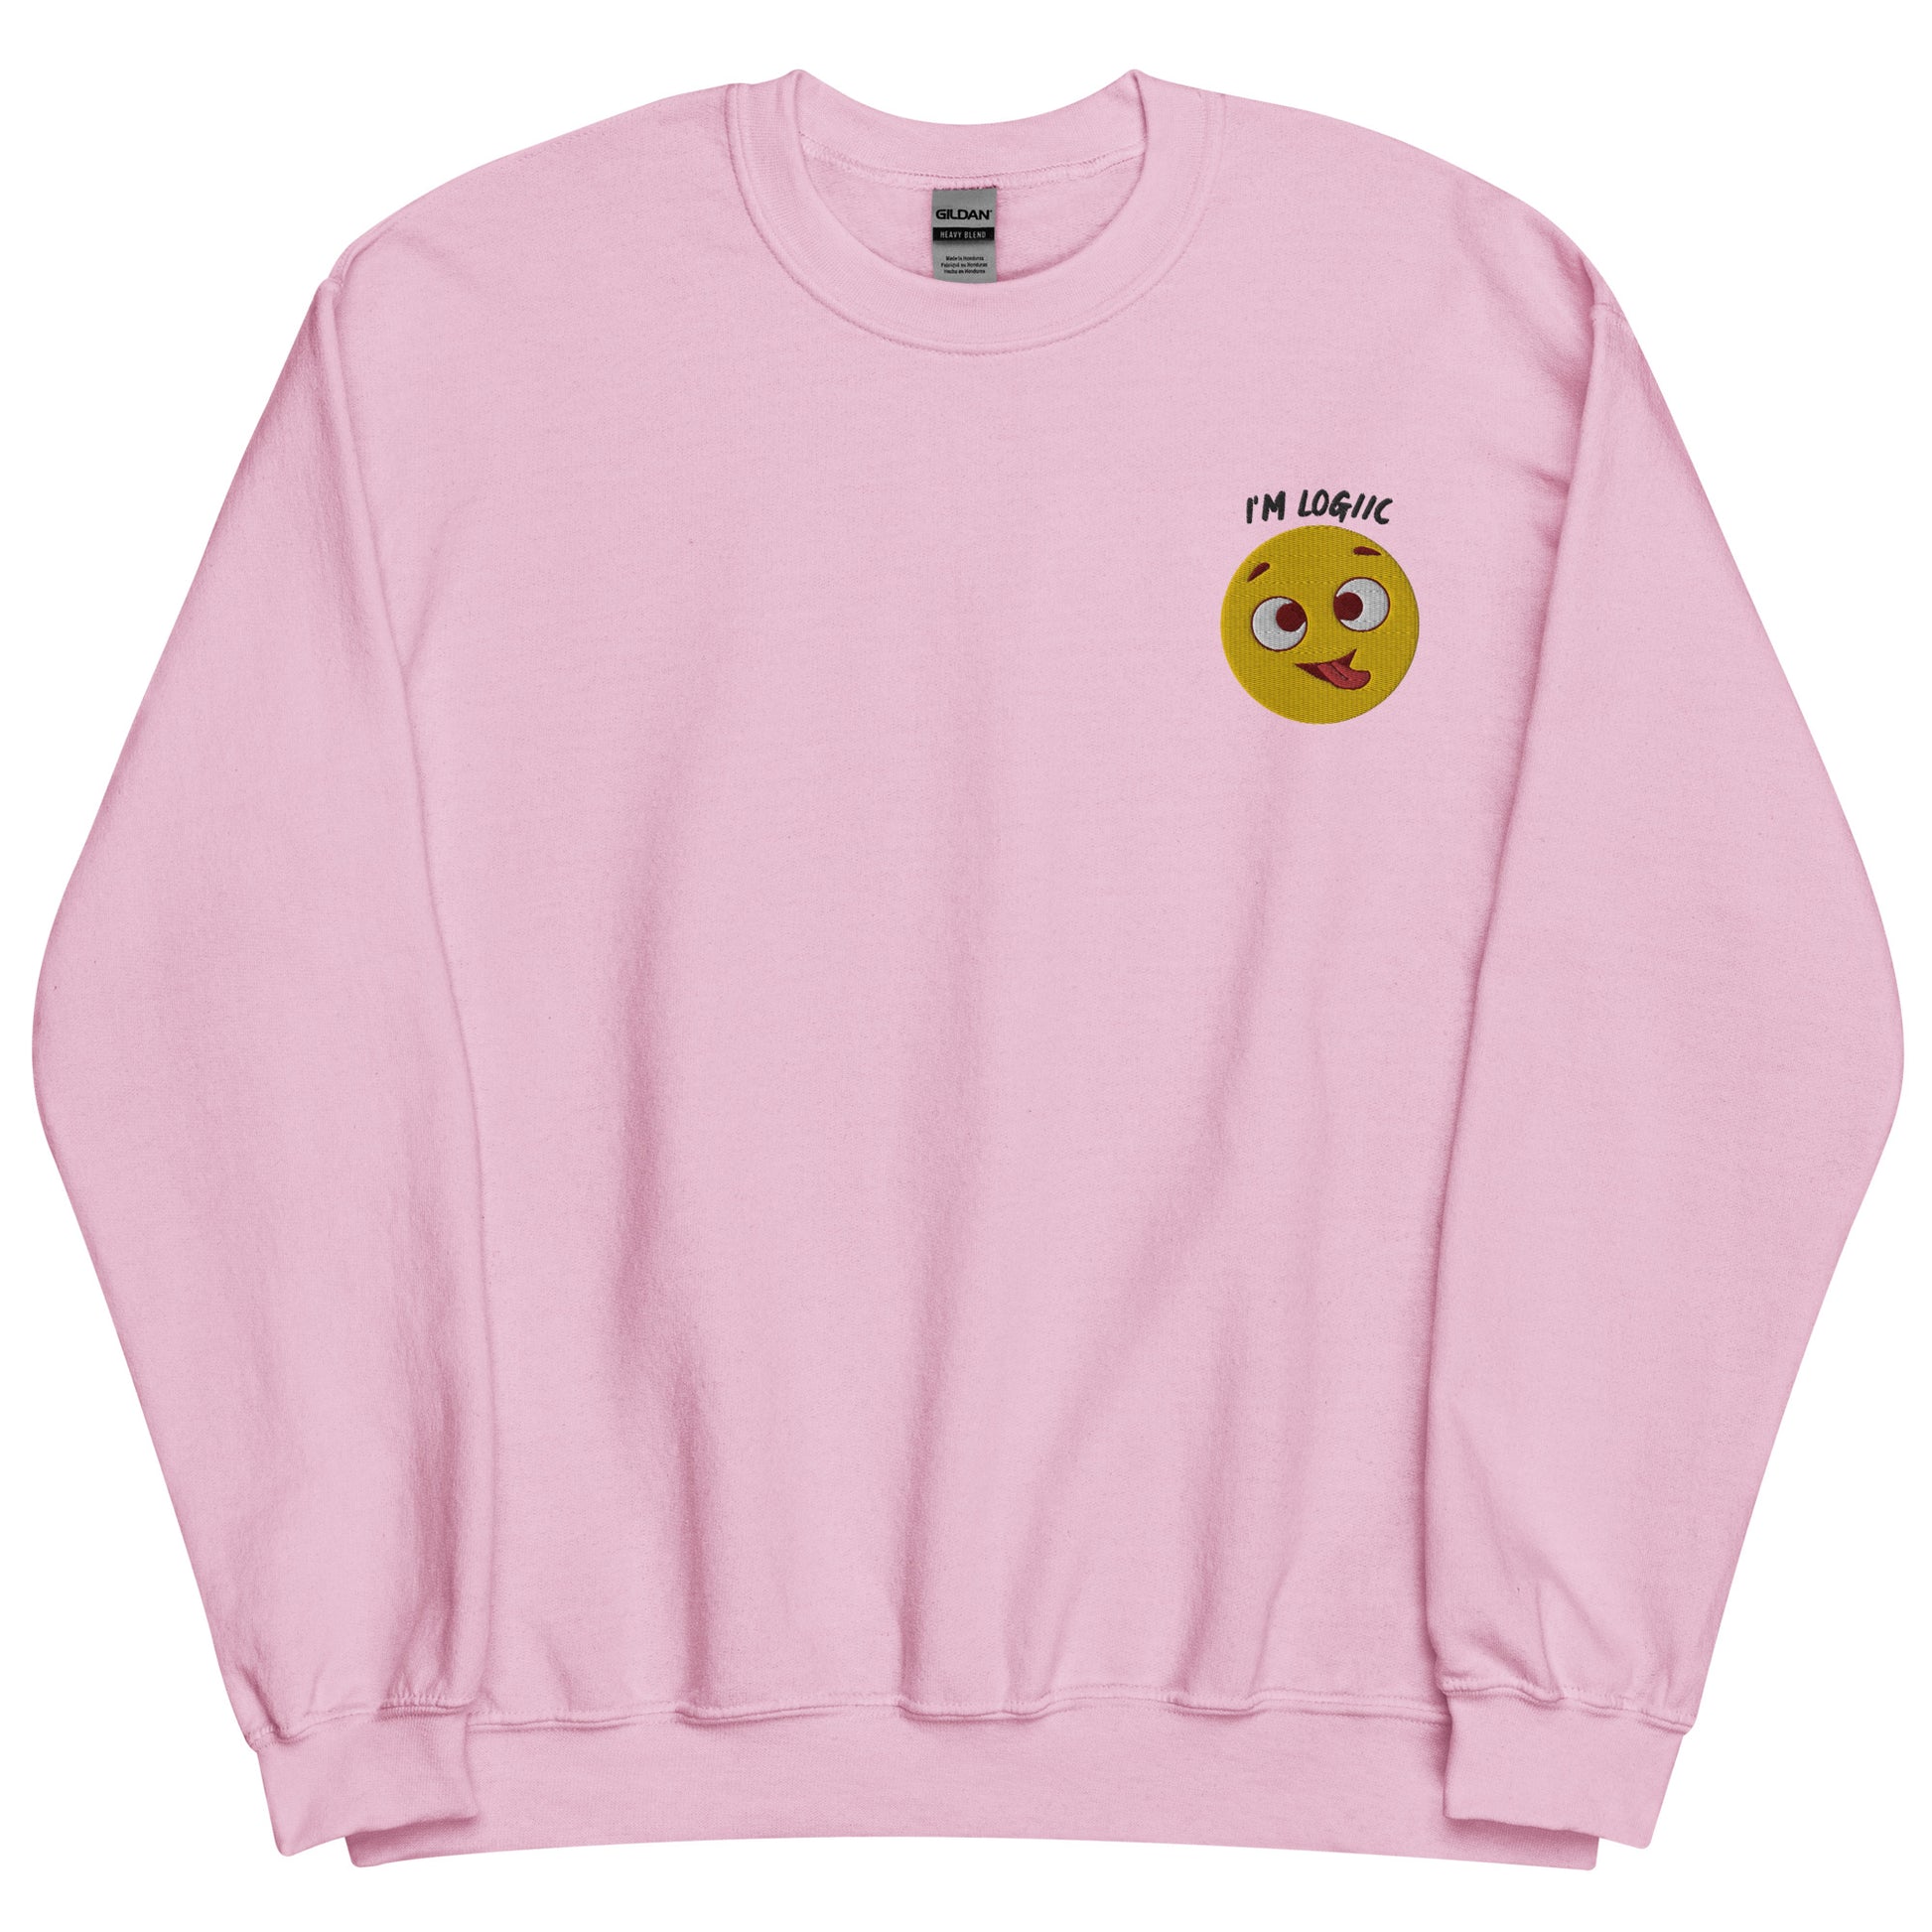 Silly Face Unisex Sweatshirt - Light Pink / S